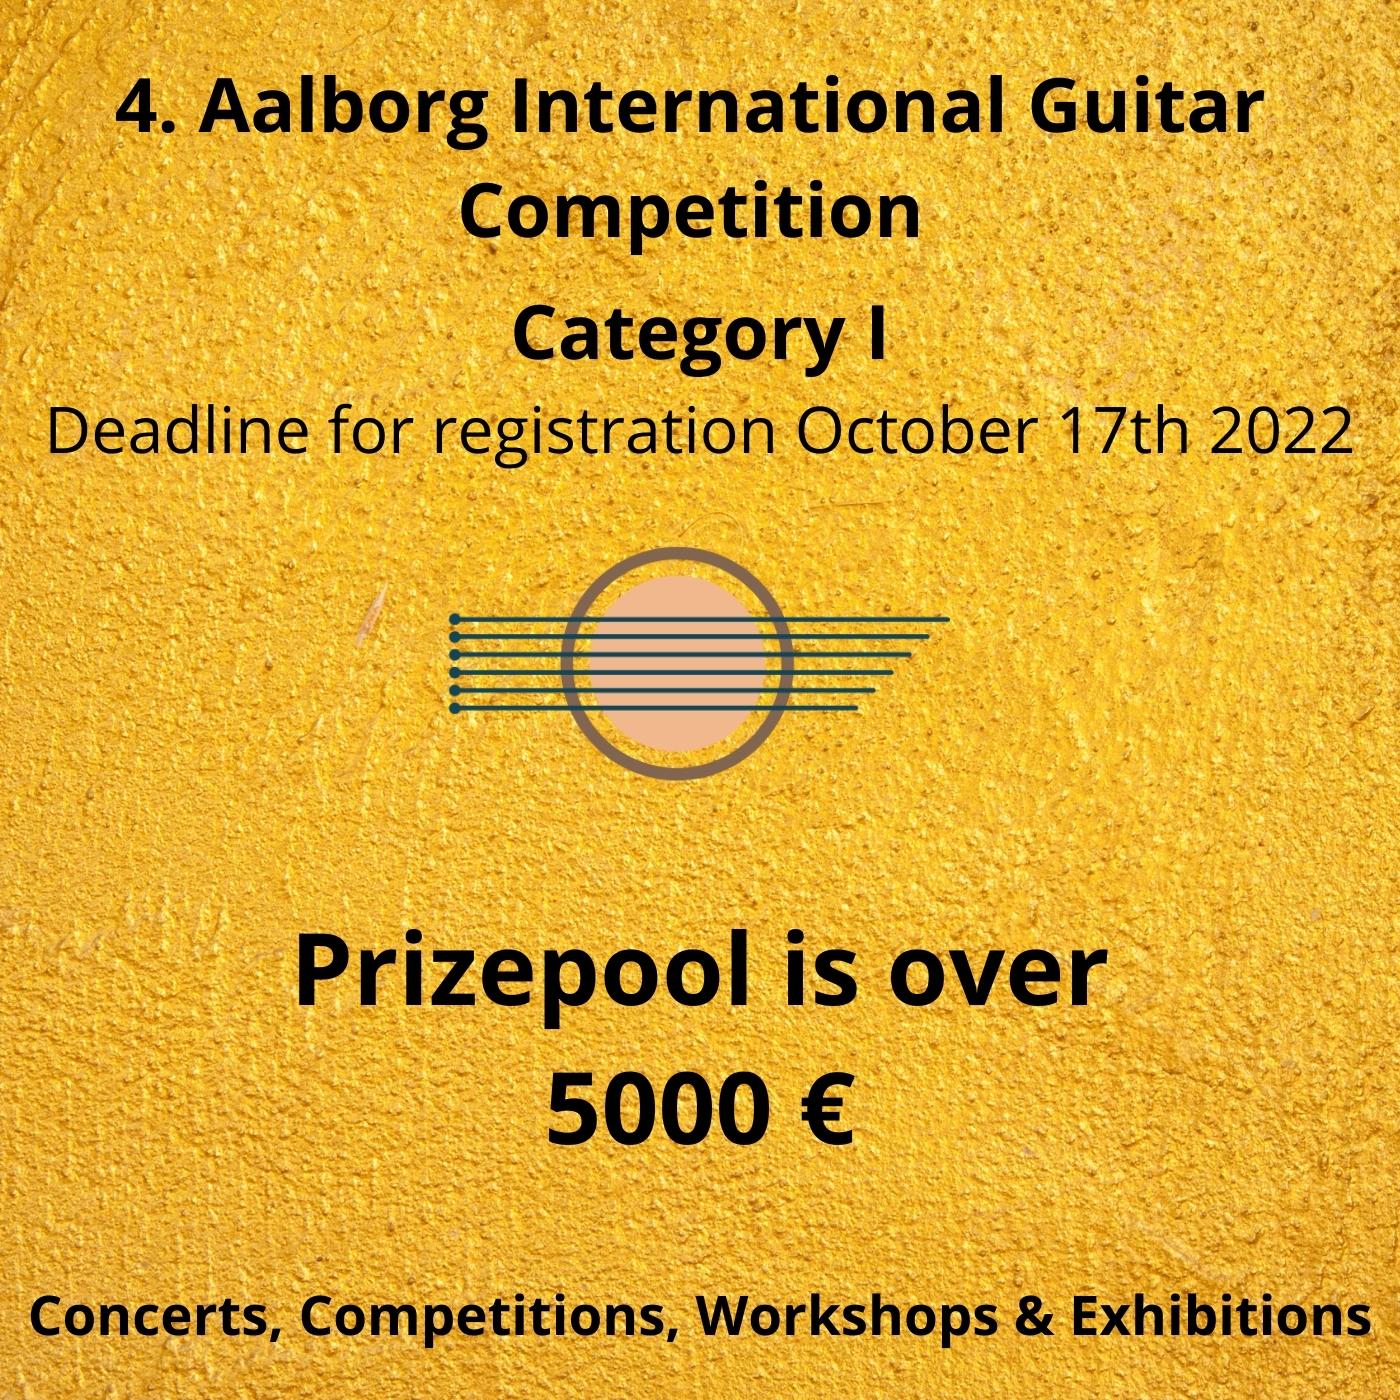 Aalborg Guitar Festival - image 1 on https://aalborgguitarfestival.com